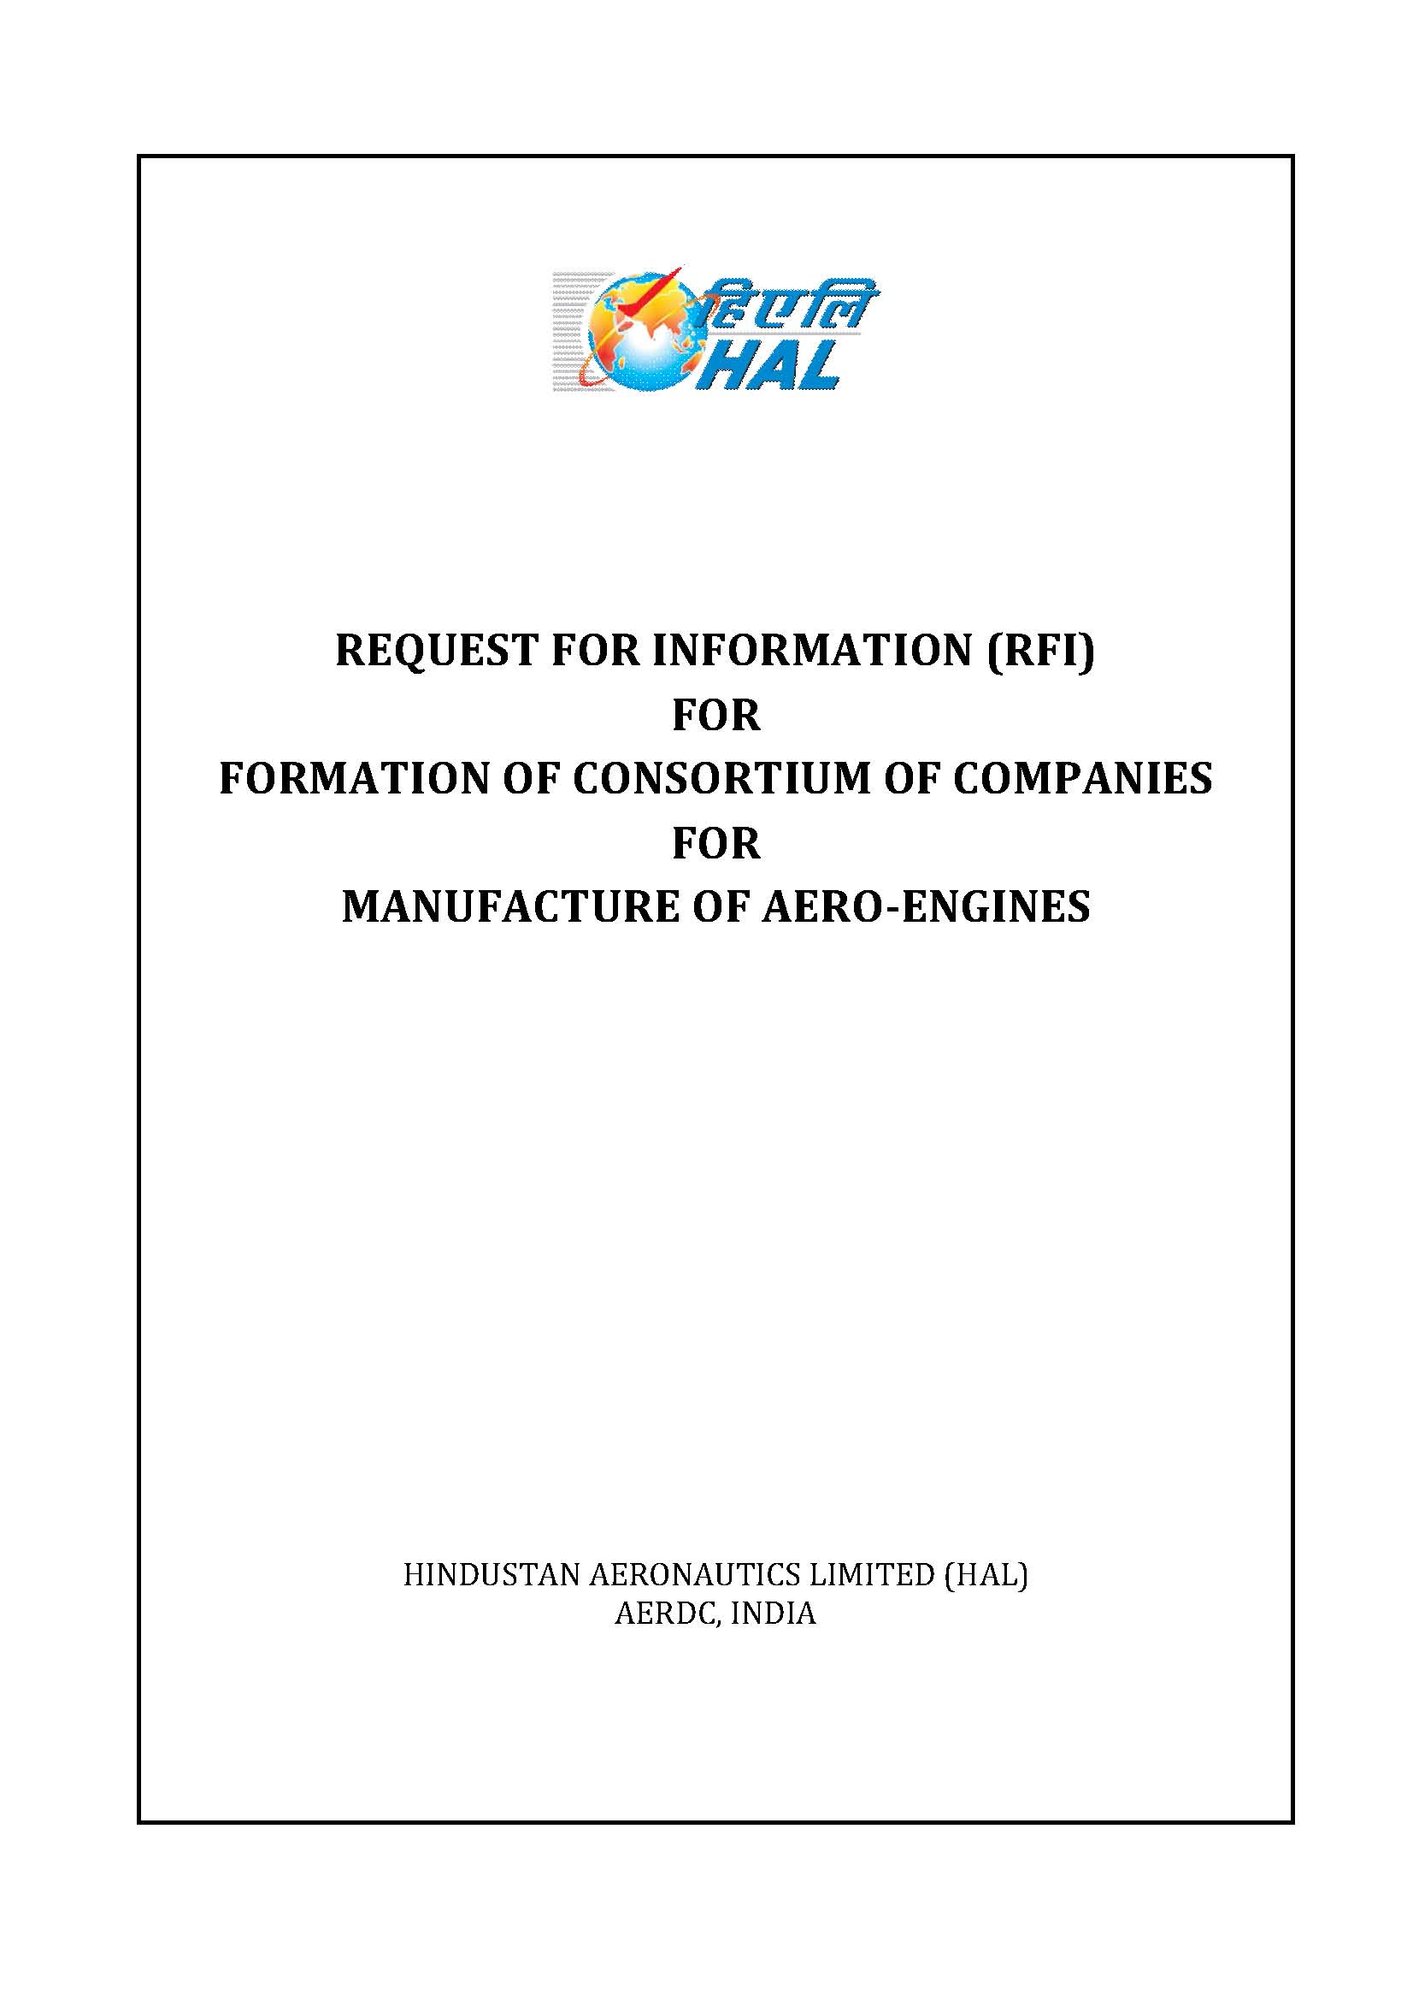 engine consortium_Page_01.jpg